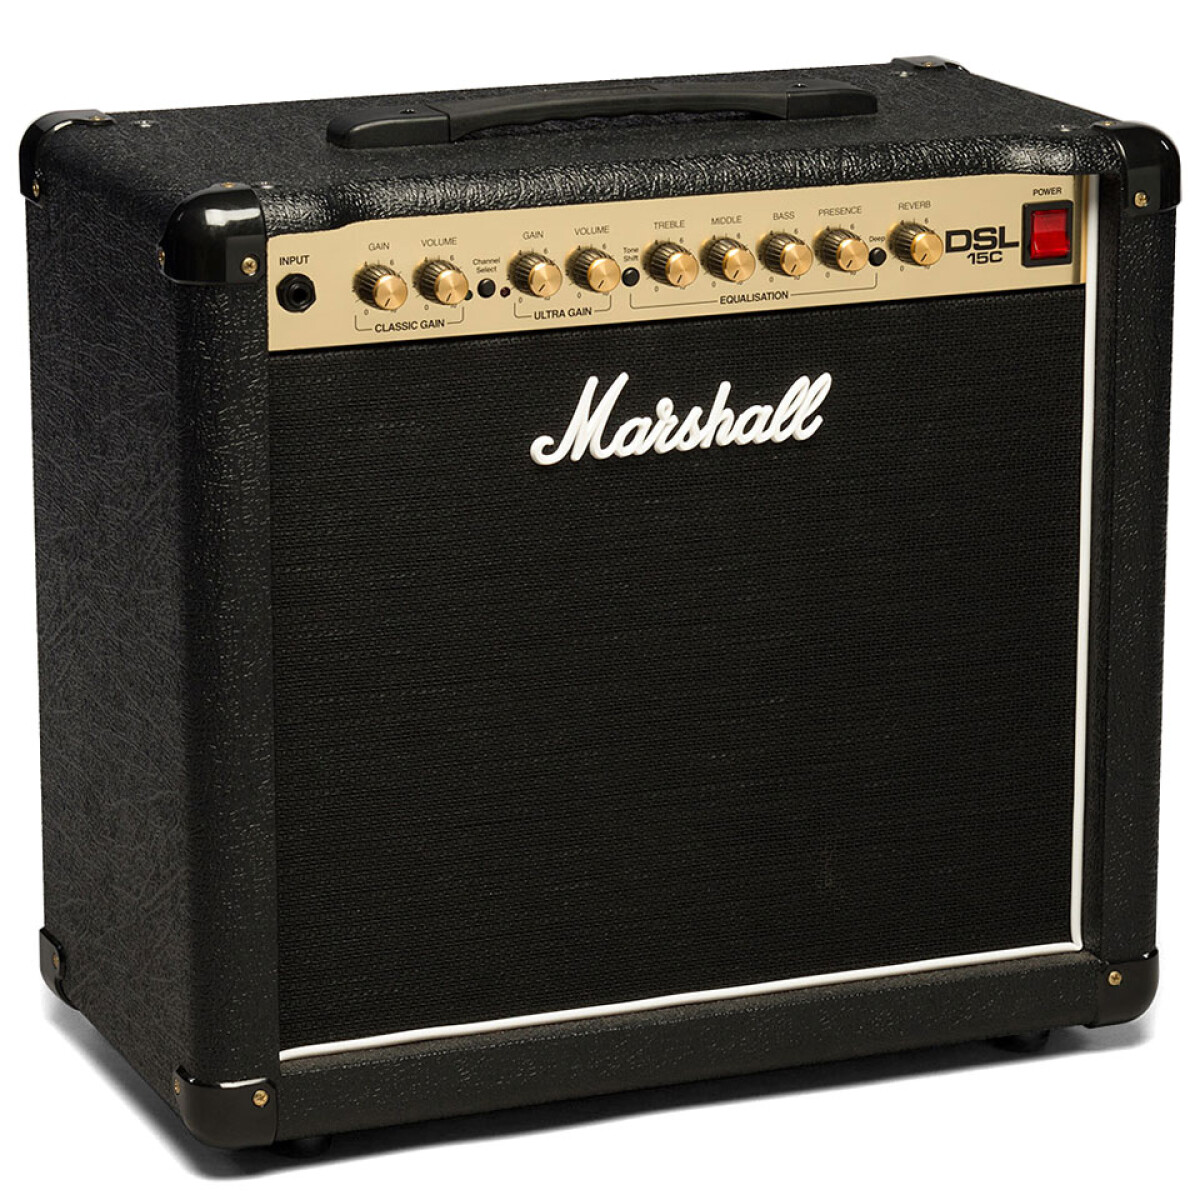 Amplificador Guitarra Marshall Dsl15c 